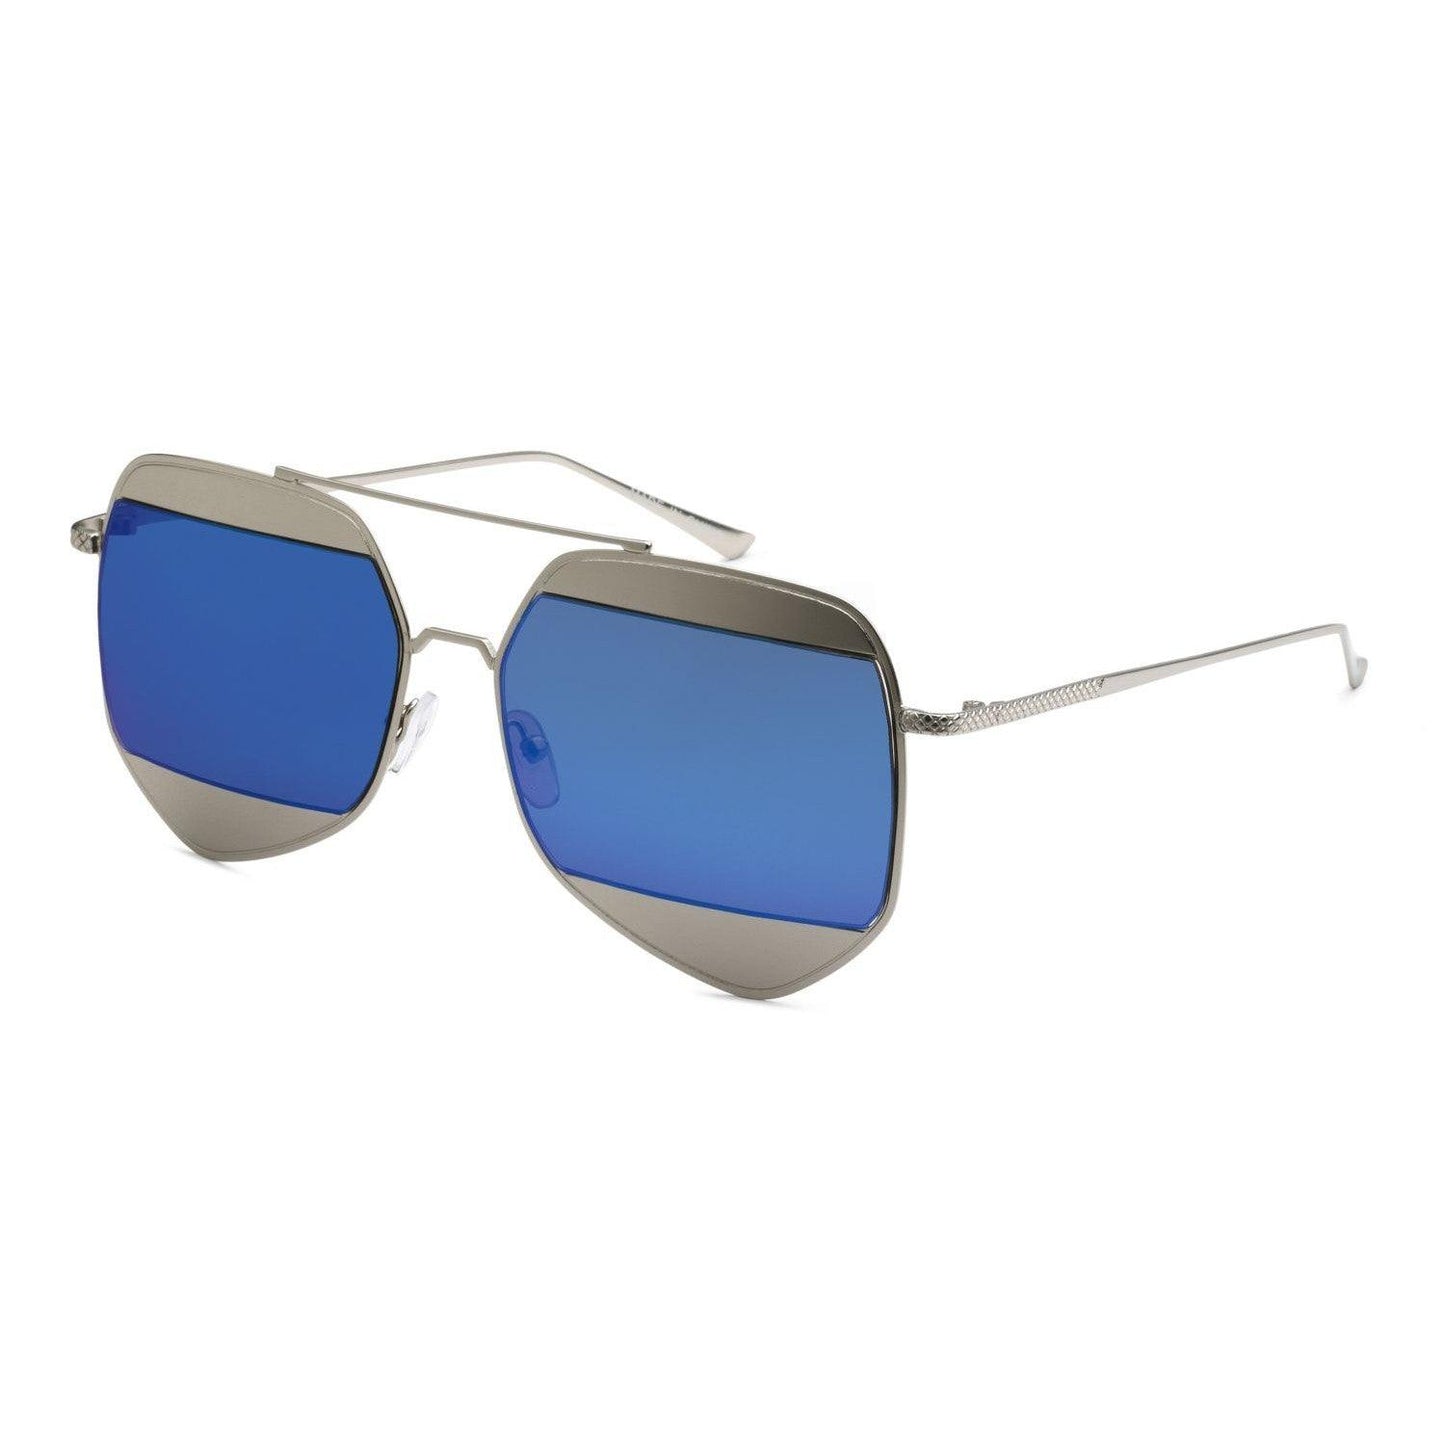 Retro Reflective Sunglasses - Weekend Shade Sunglasses